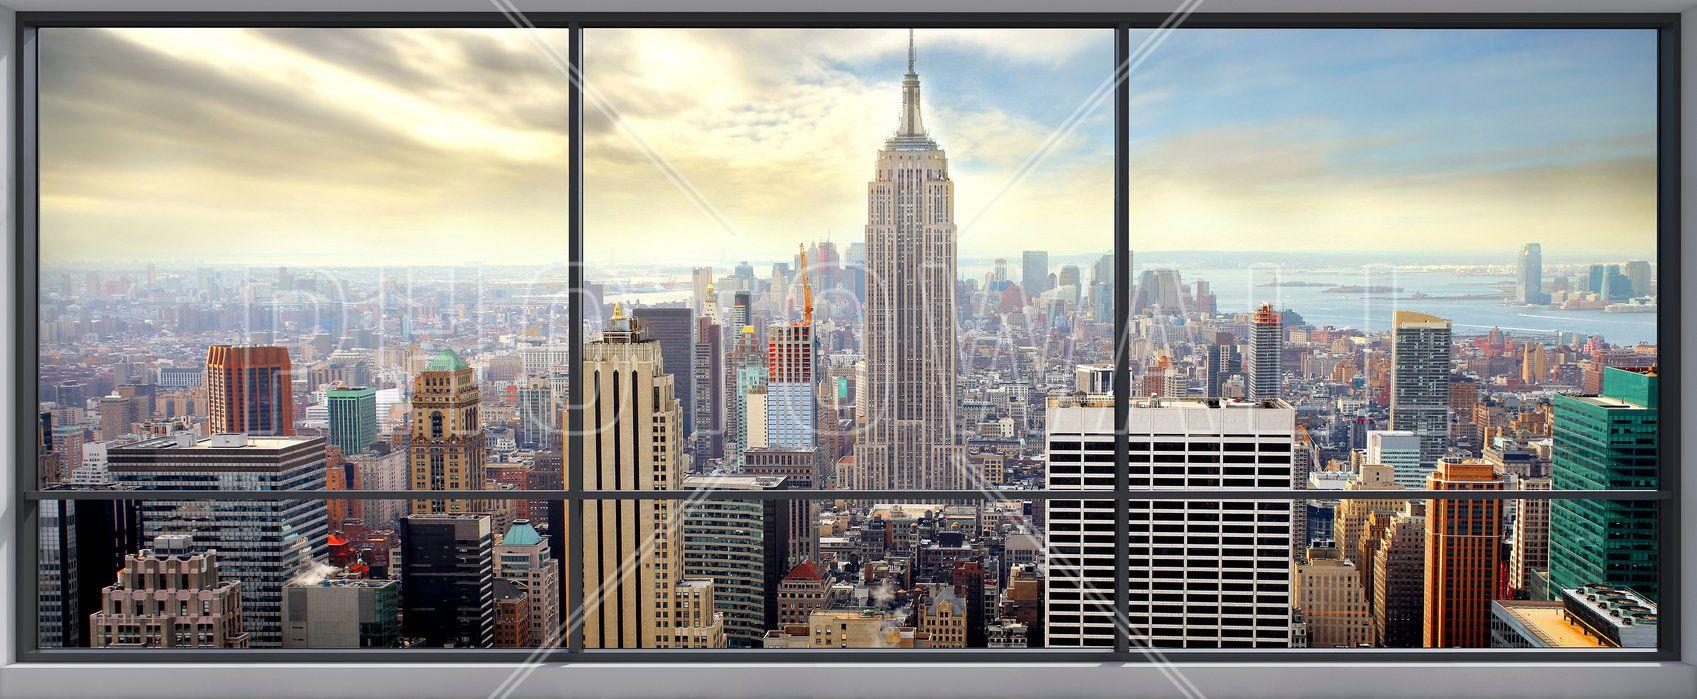 lock screen windows 10 wallpaper city